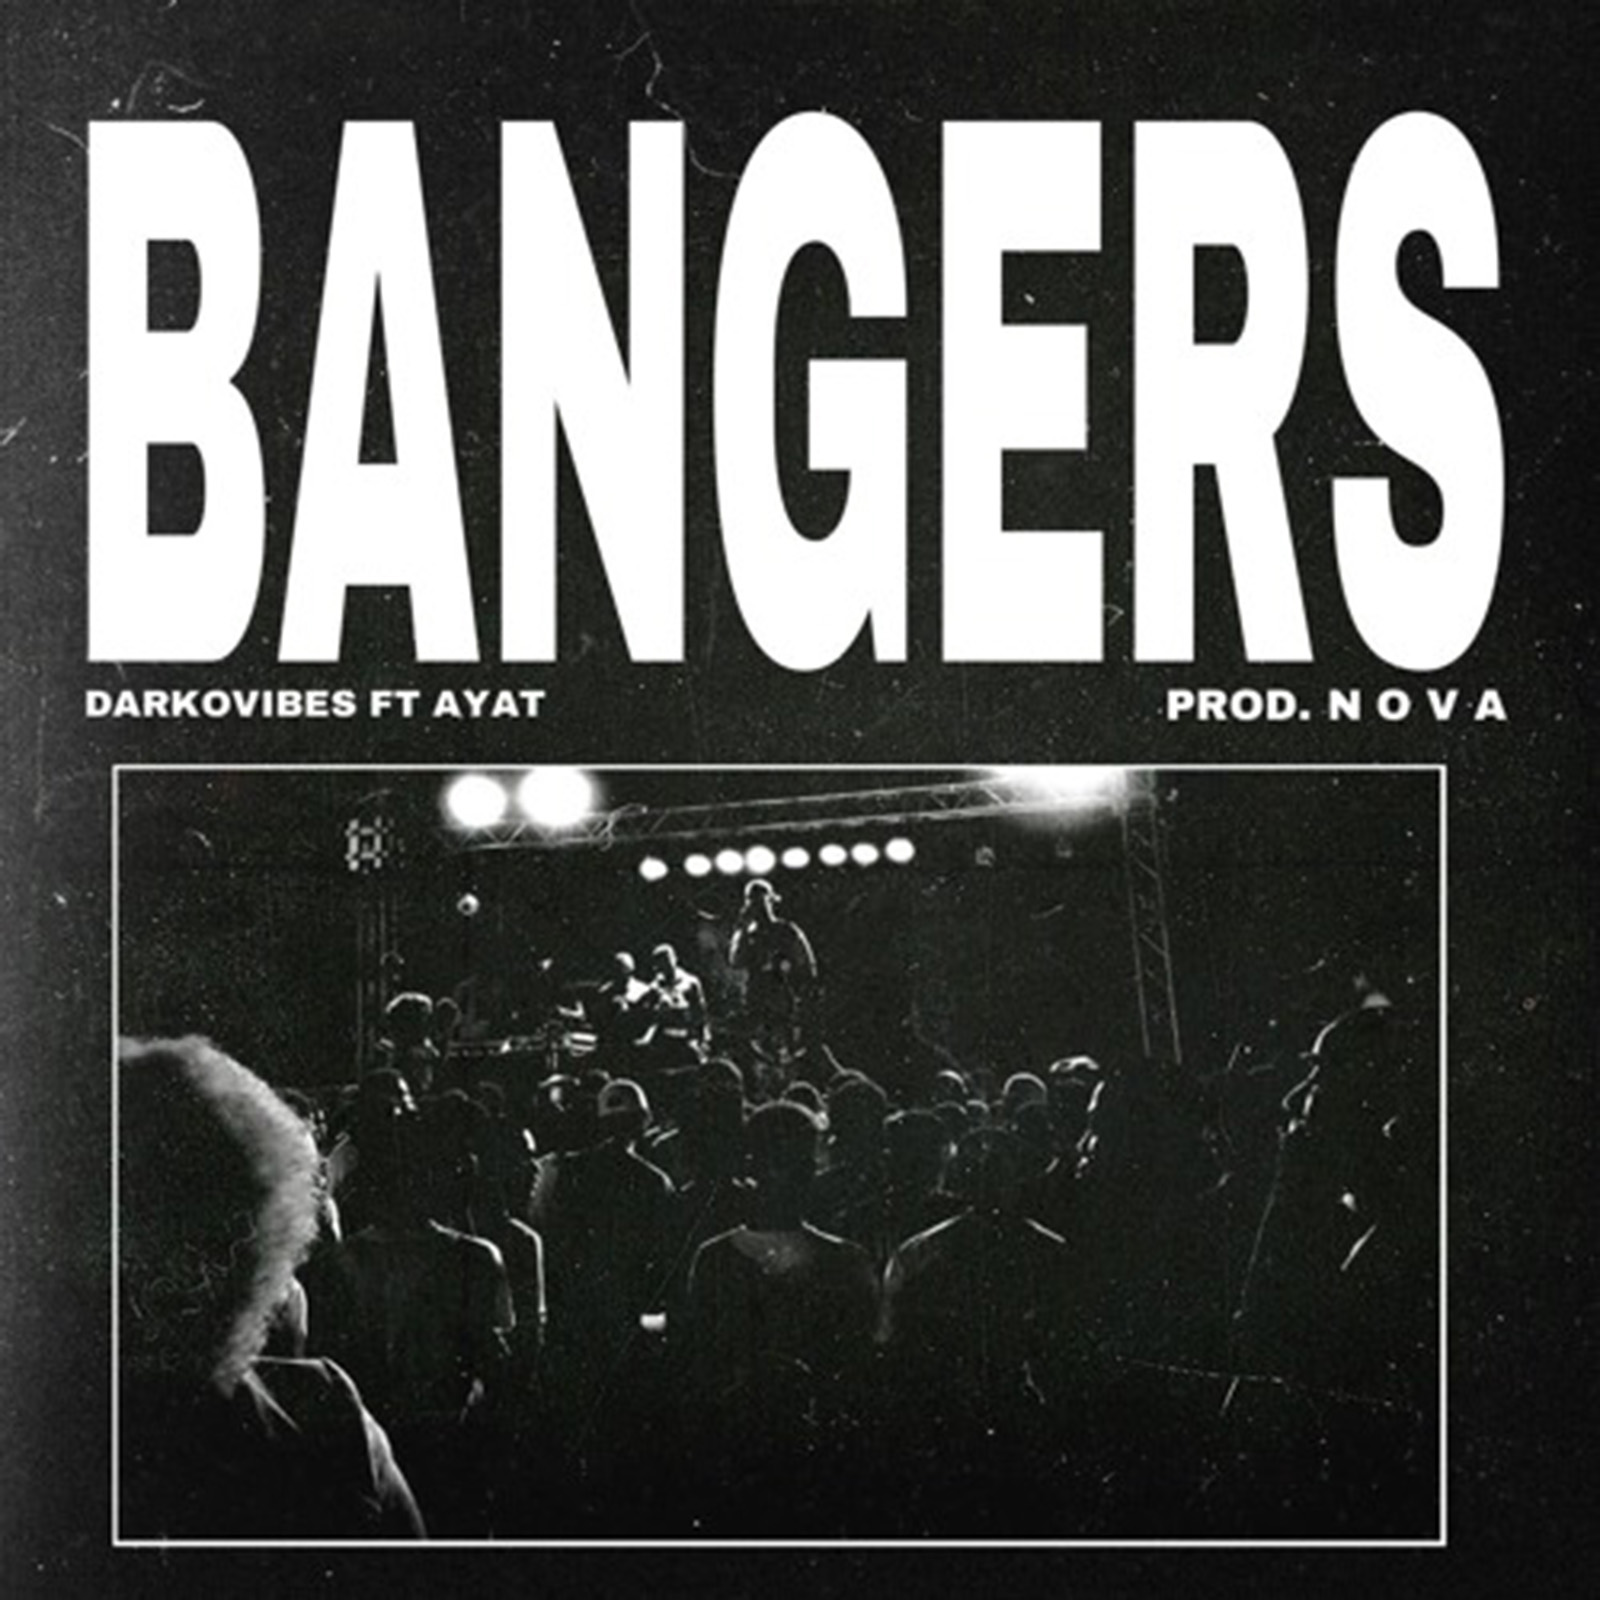 Bangers by Darkovibes feat. AYAT